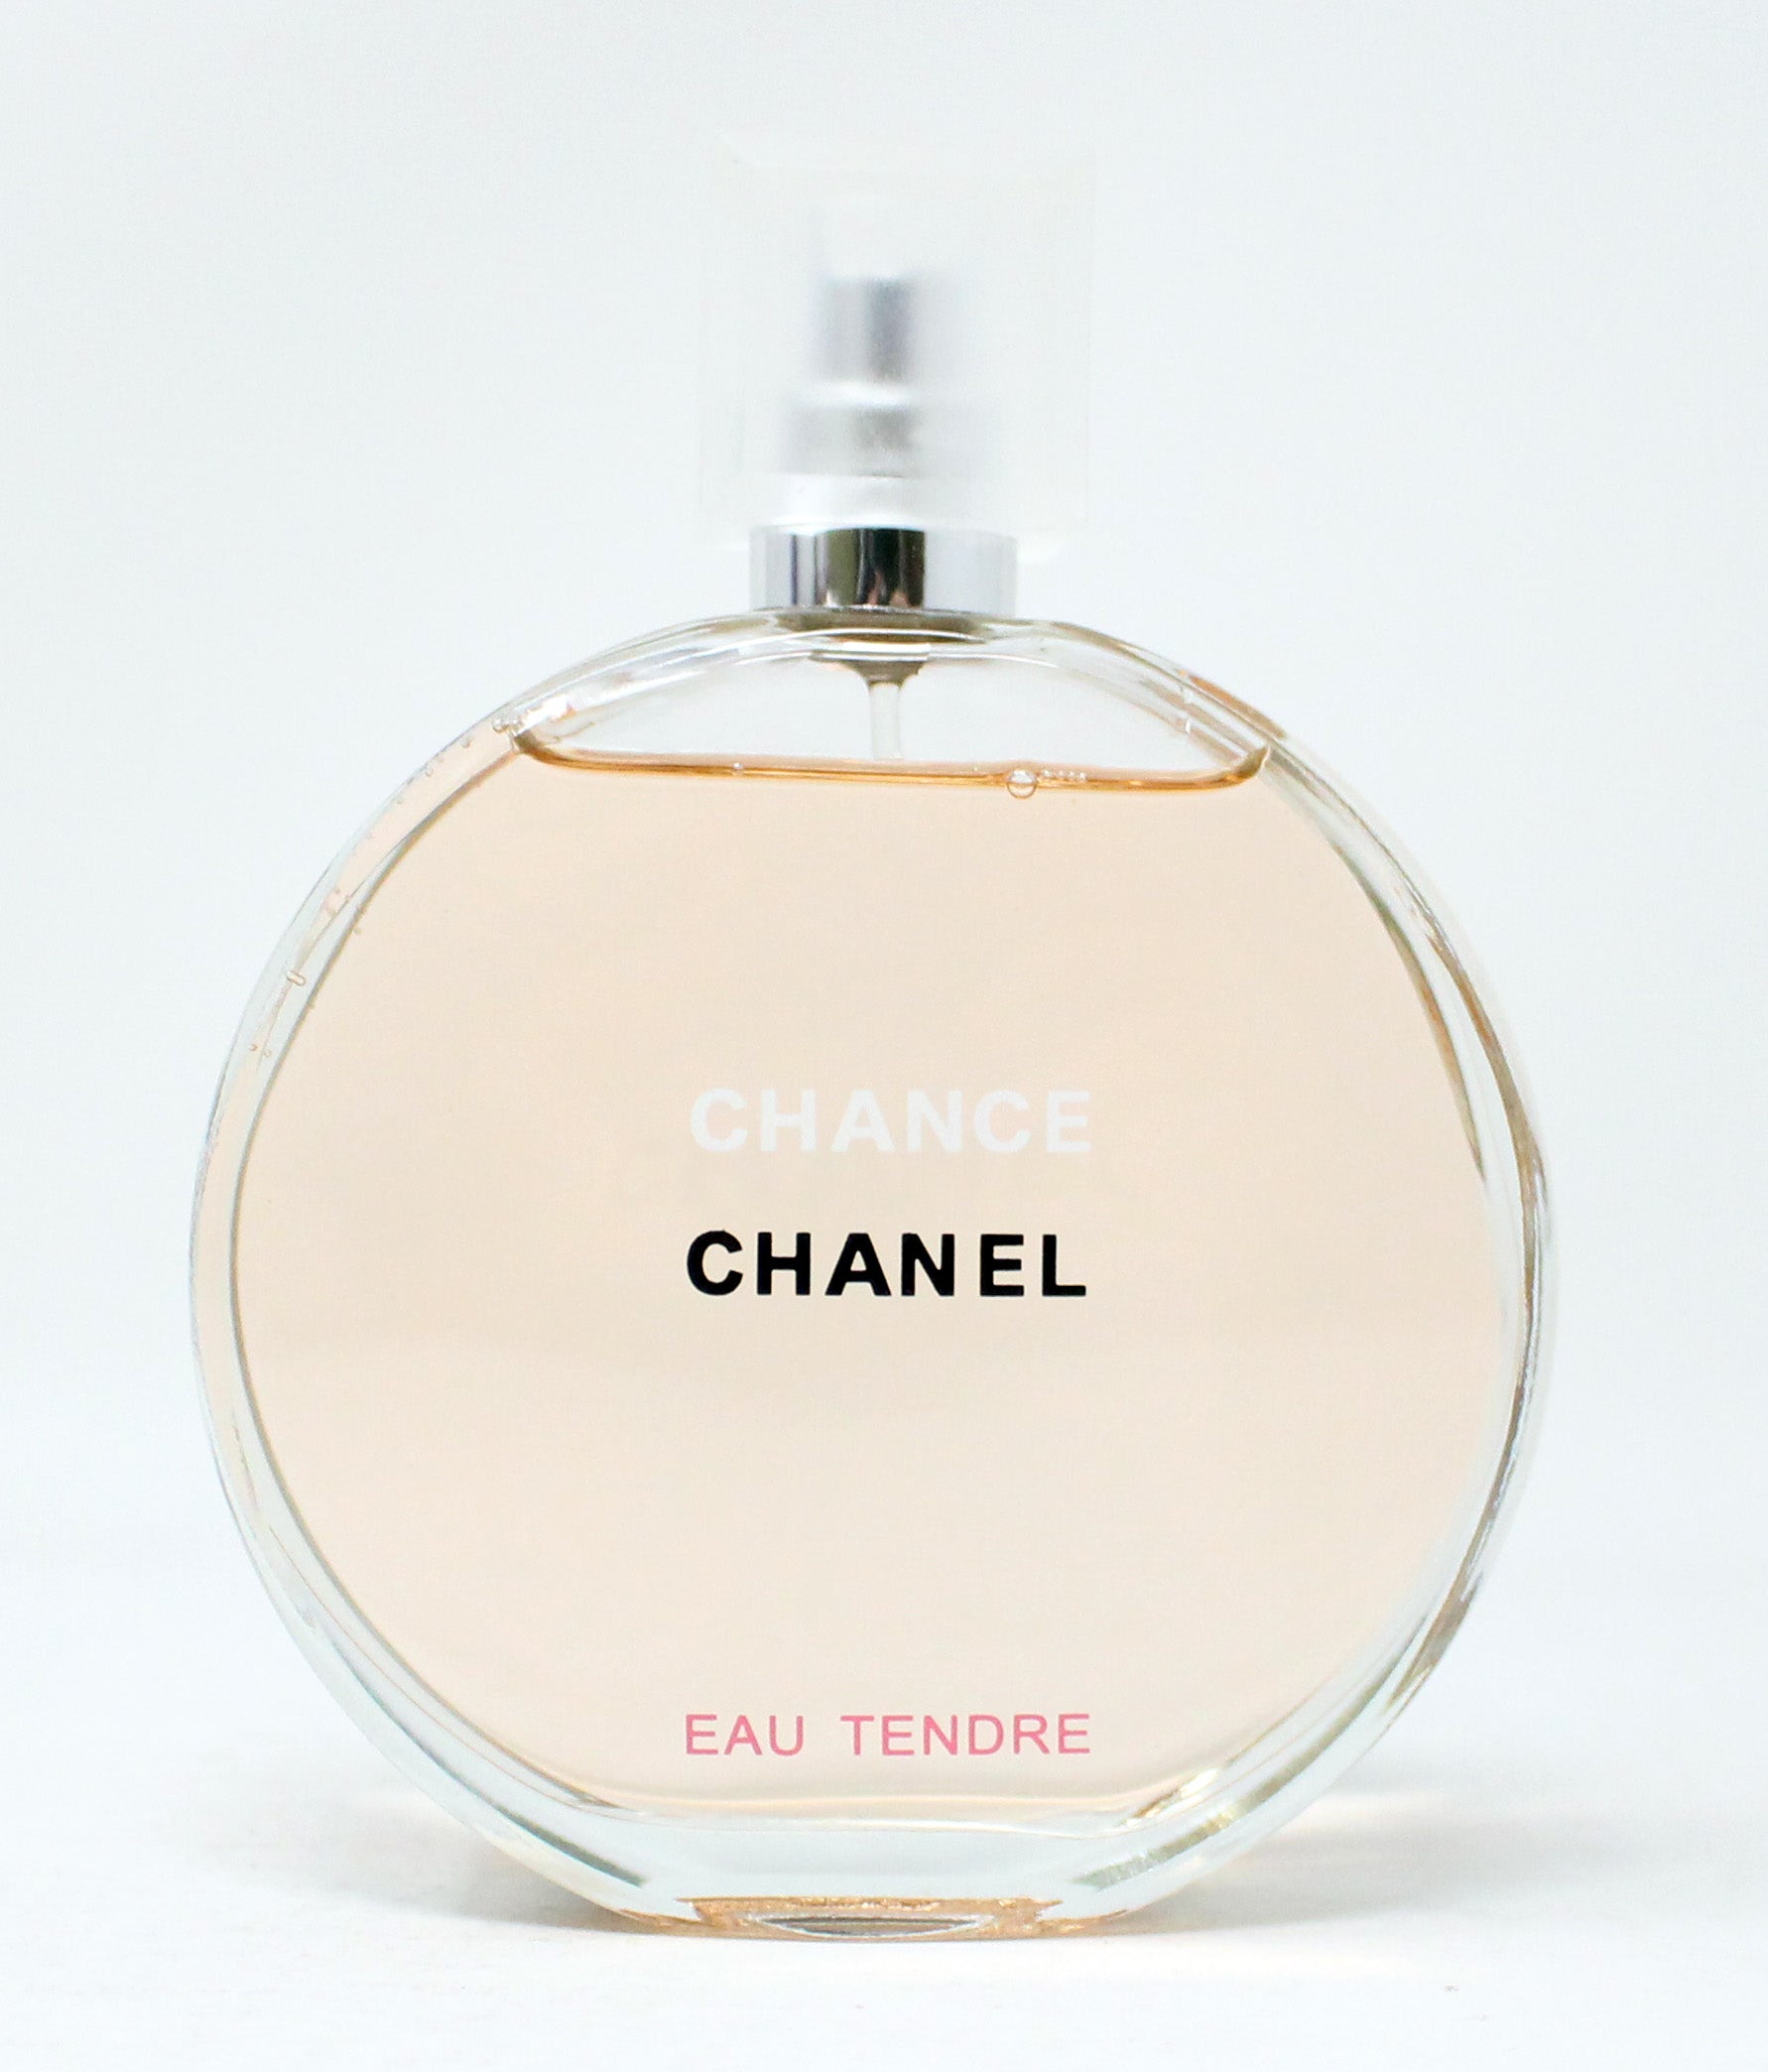 chanel chance perfume 3.4